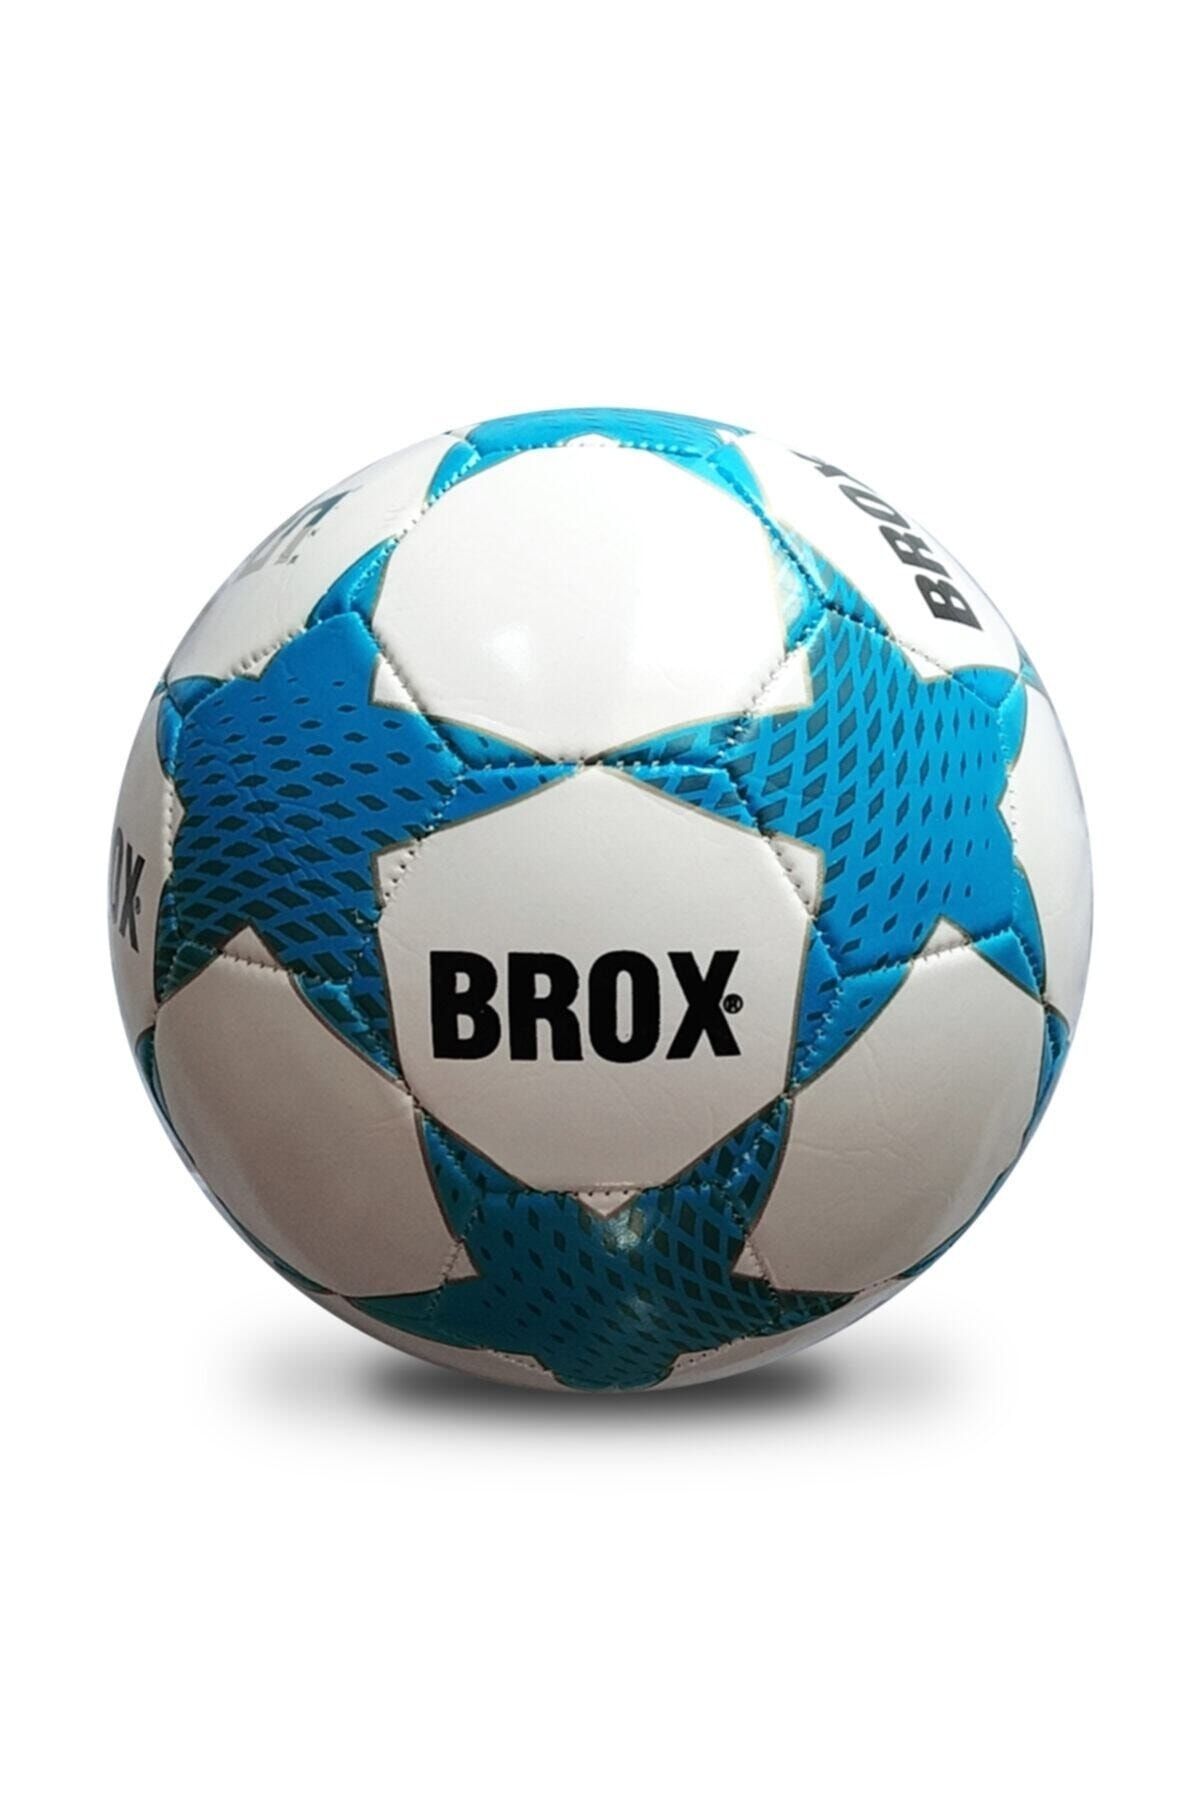 Voit Brox Futbol Topu Sıze 5 - 1bxtpskfut1